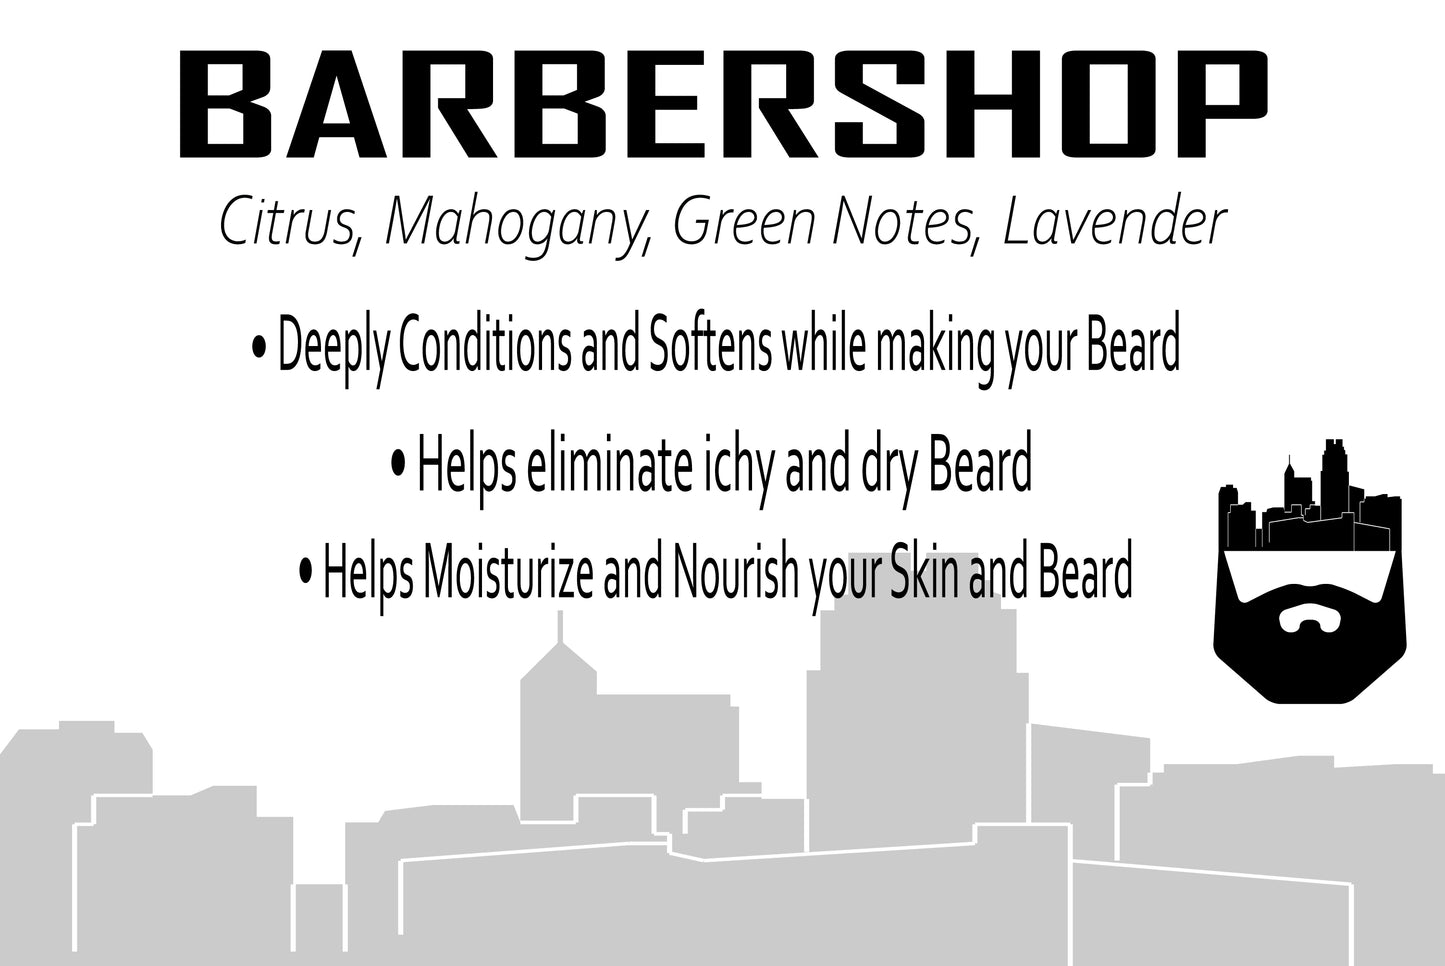 BarberShop (Beard Balm) by Oak City Beard Company